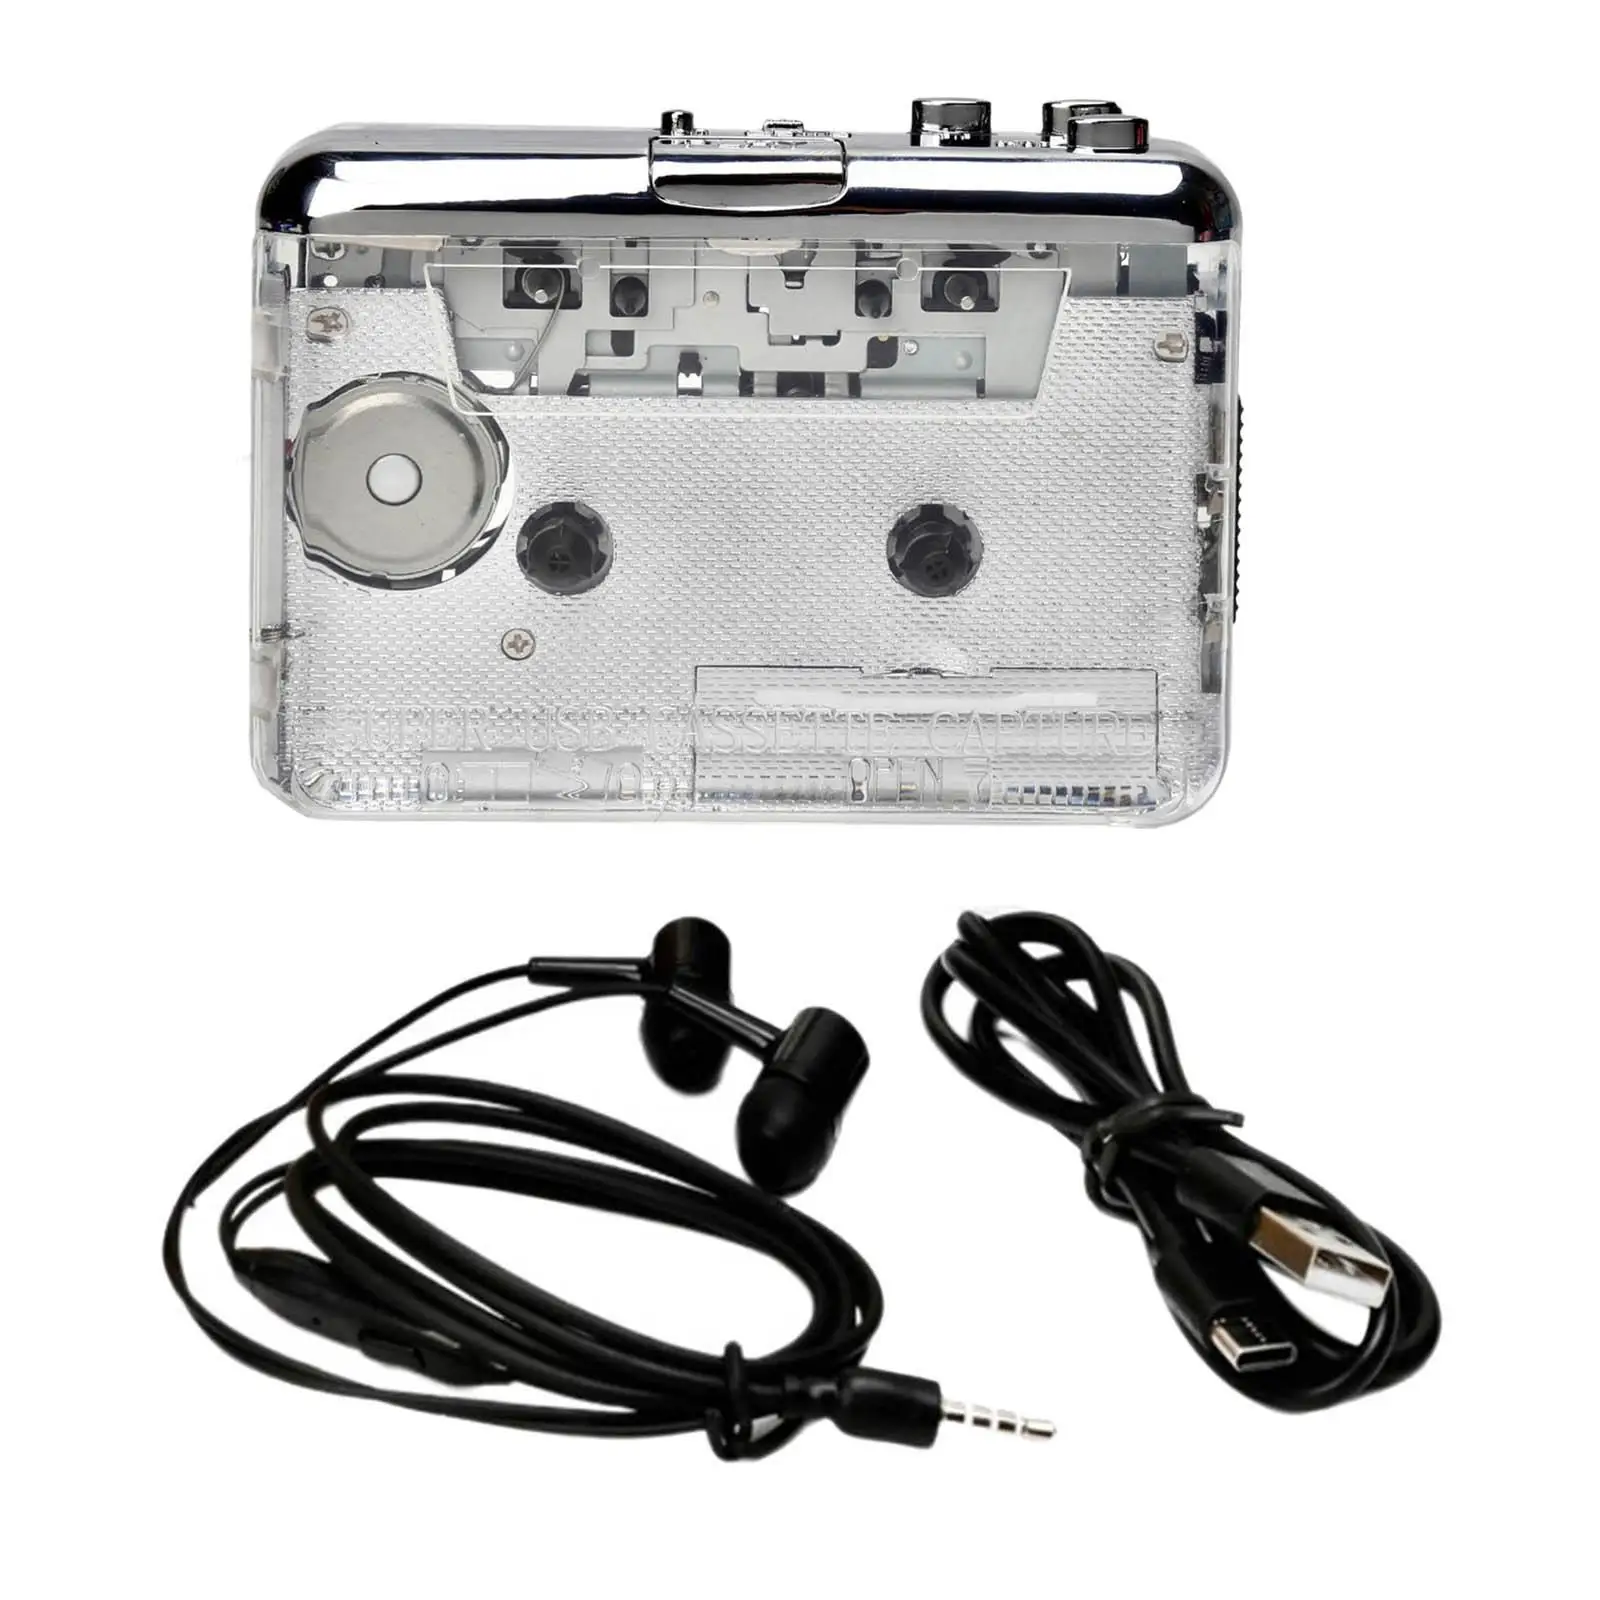 

USB Cassette Tape to MP3 CD Music Cassette Player Convert Walkman Converter for Laptop PC Headphones Earbuds Audio Via USB